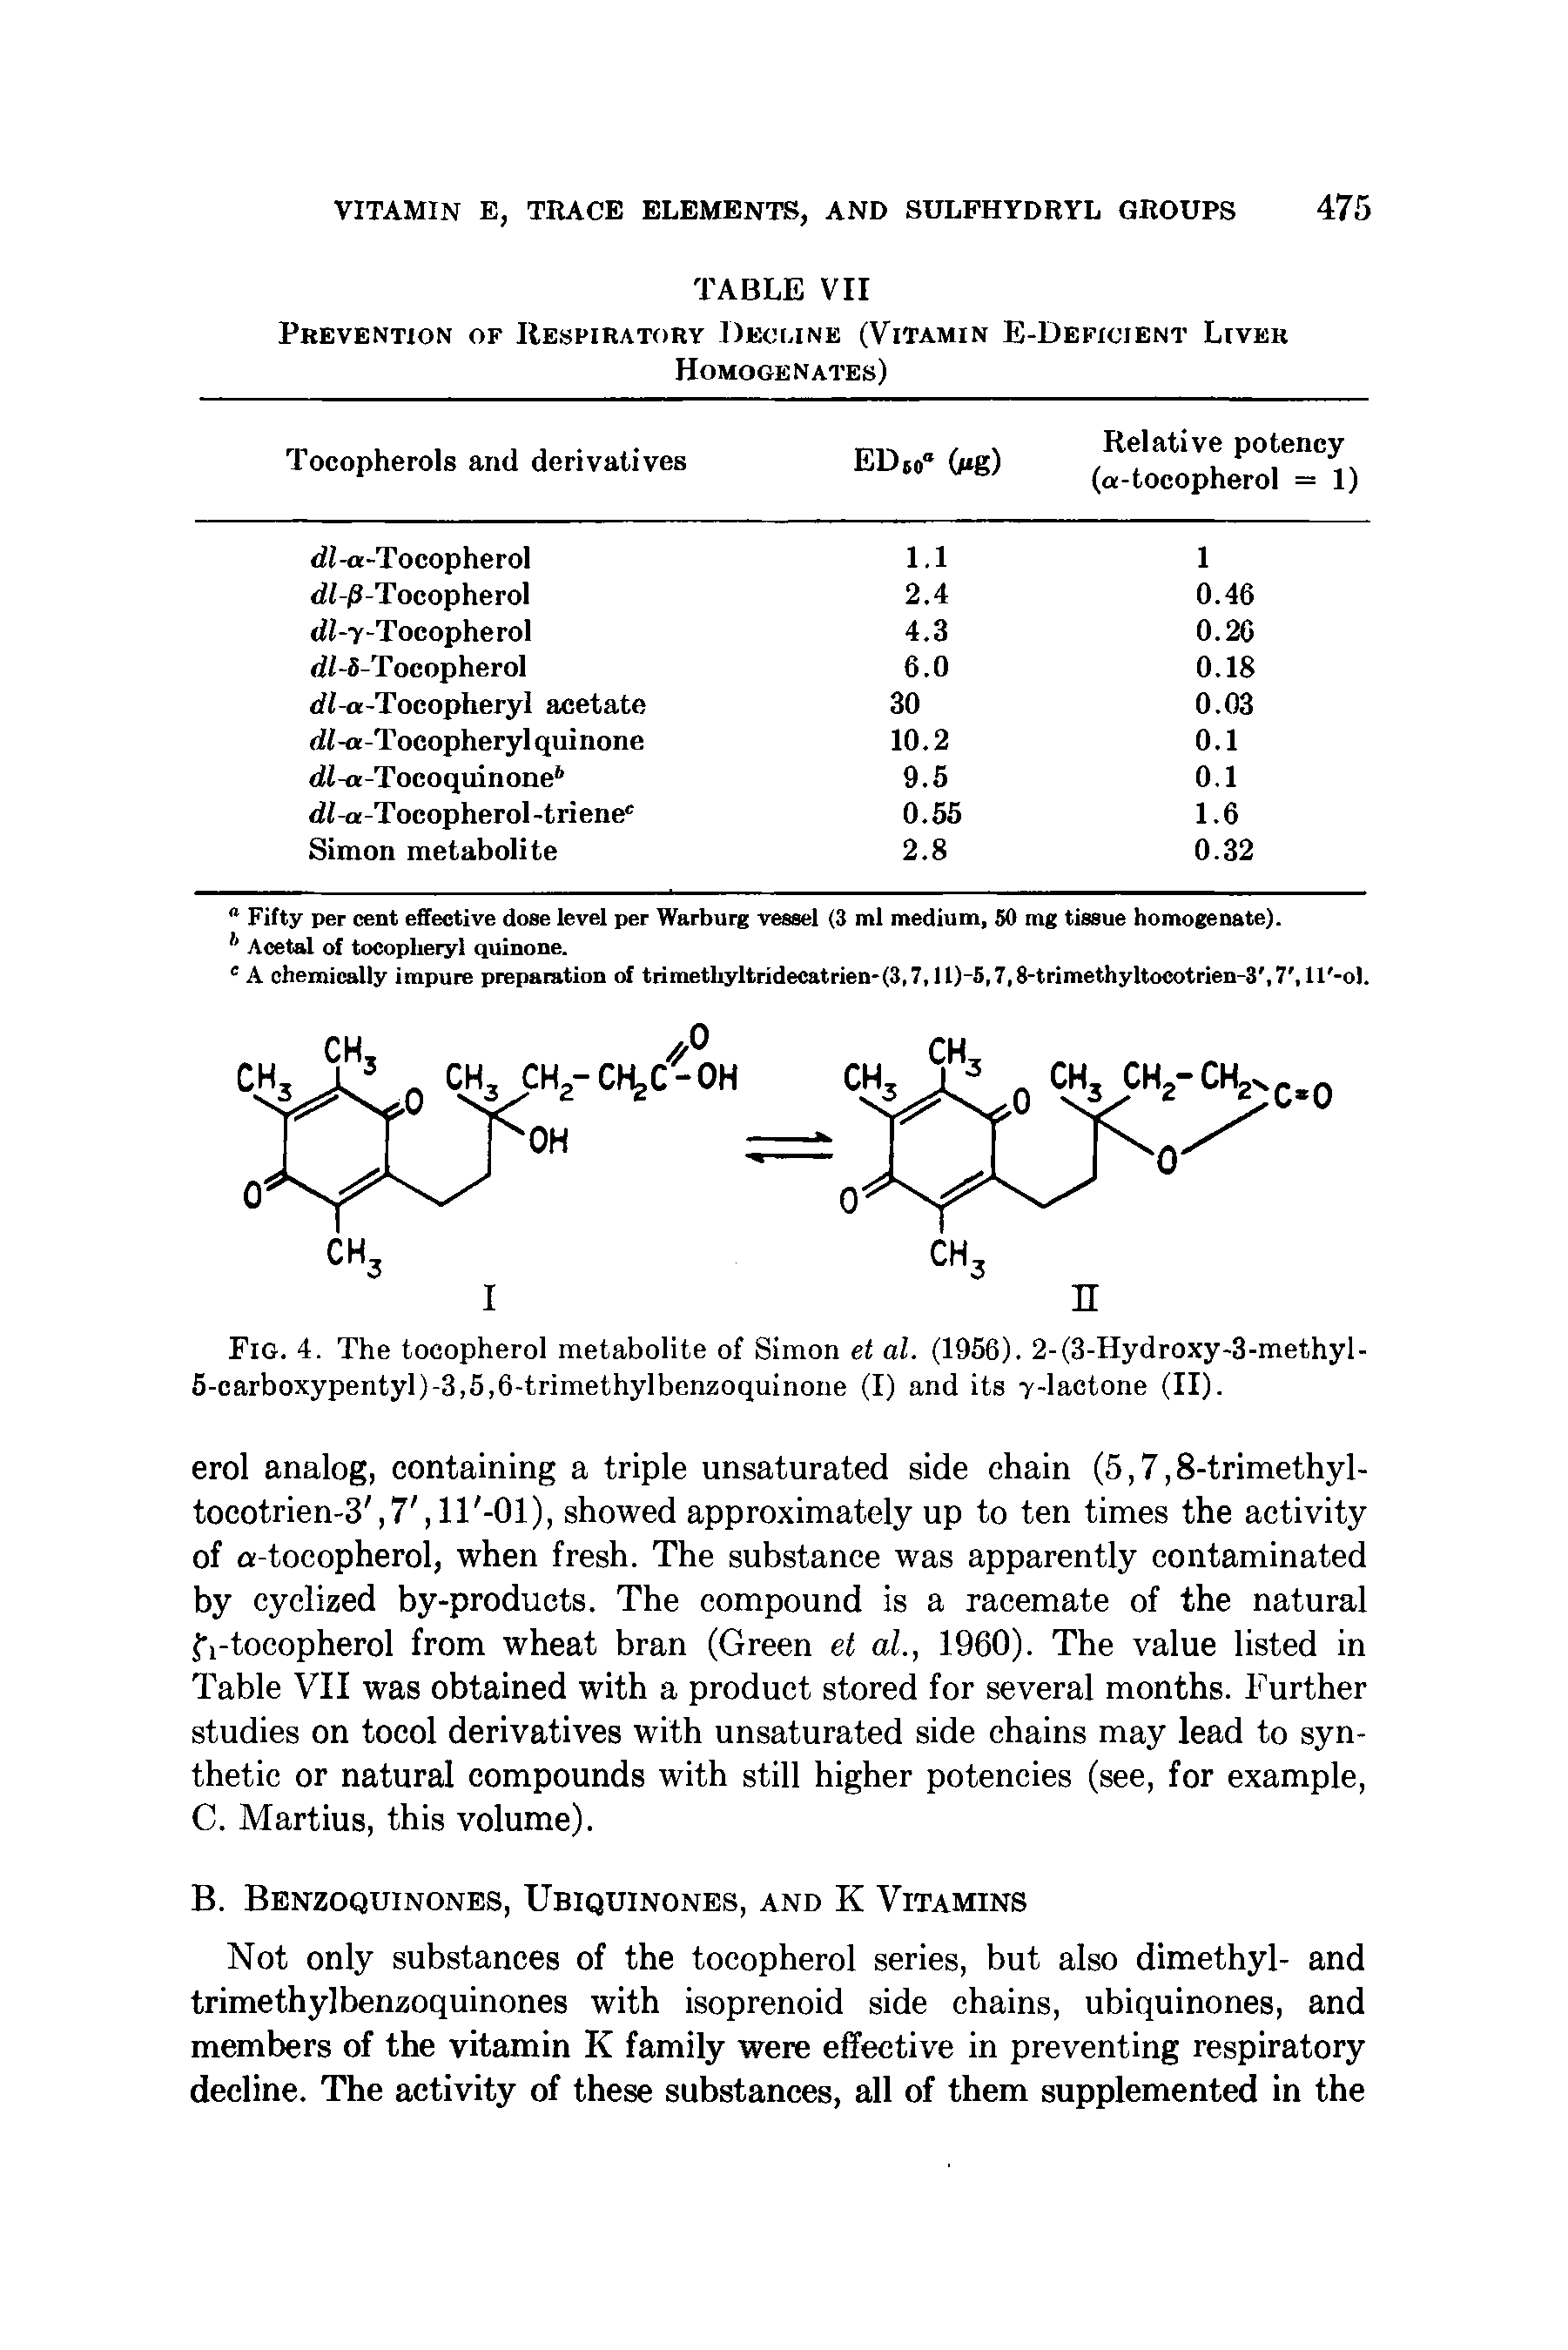 Fig. 4. The tocopherol metabolite of Simon et al. (1956). 2-(3-Hydroxy-3-methyl-5-carboxypentyl)-3,5,6-trimethylbenzoquinone (I) and its v-lactone (II).